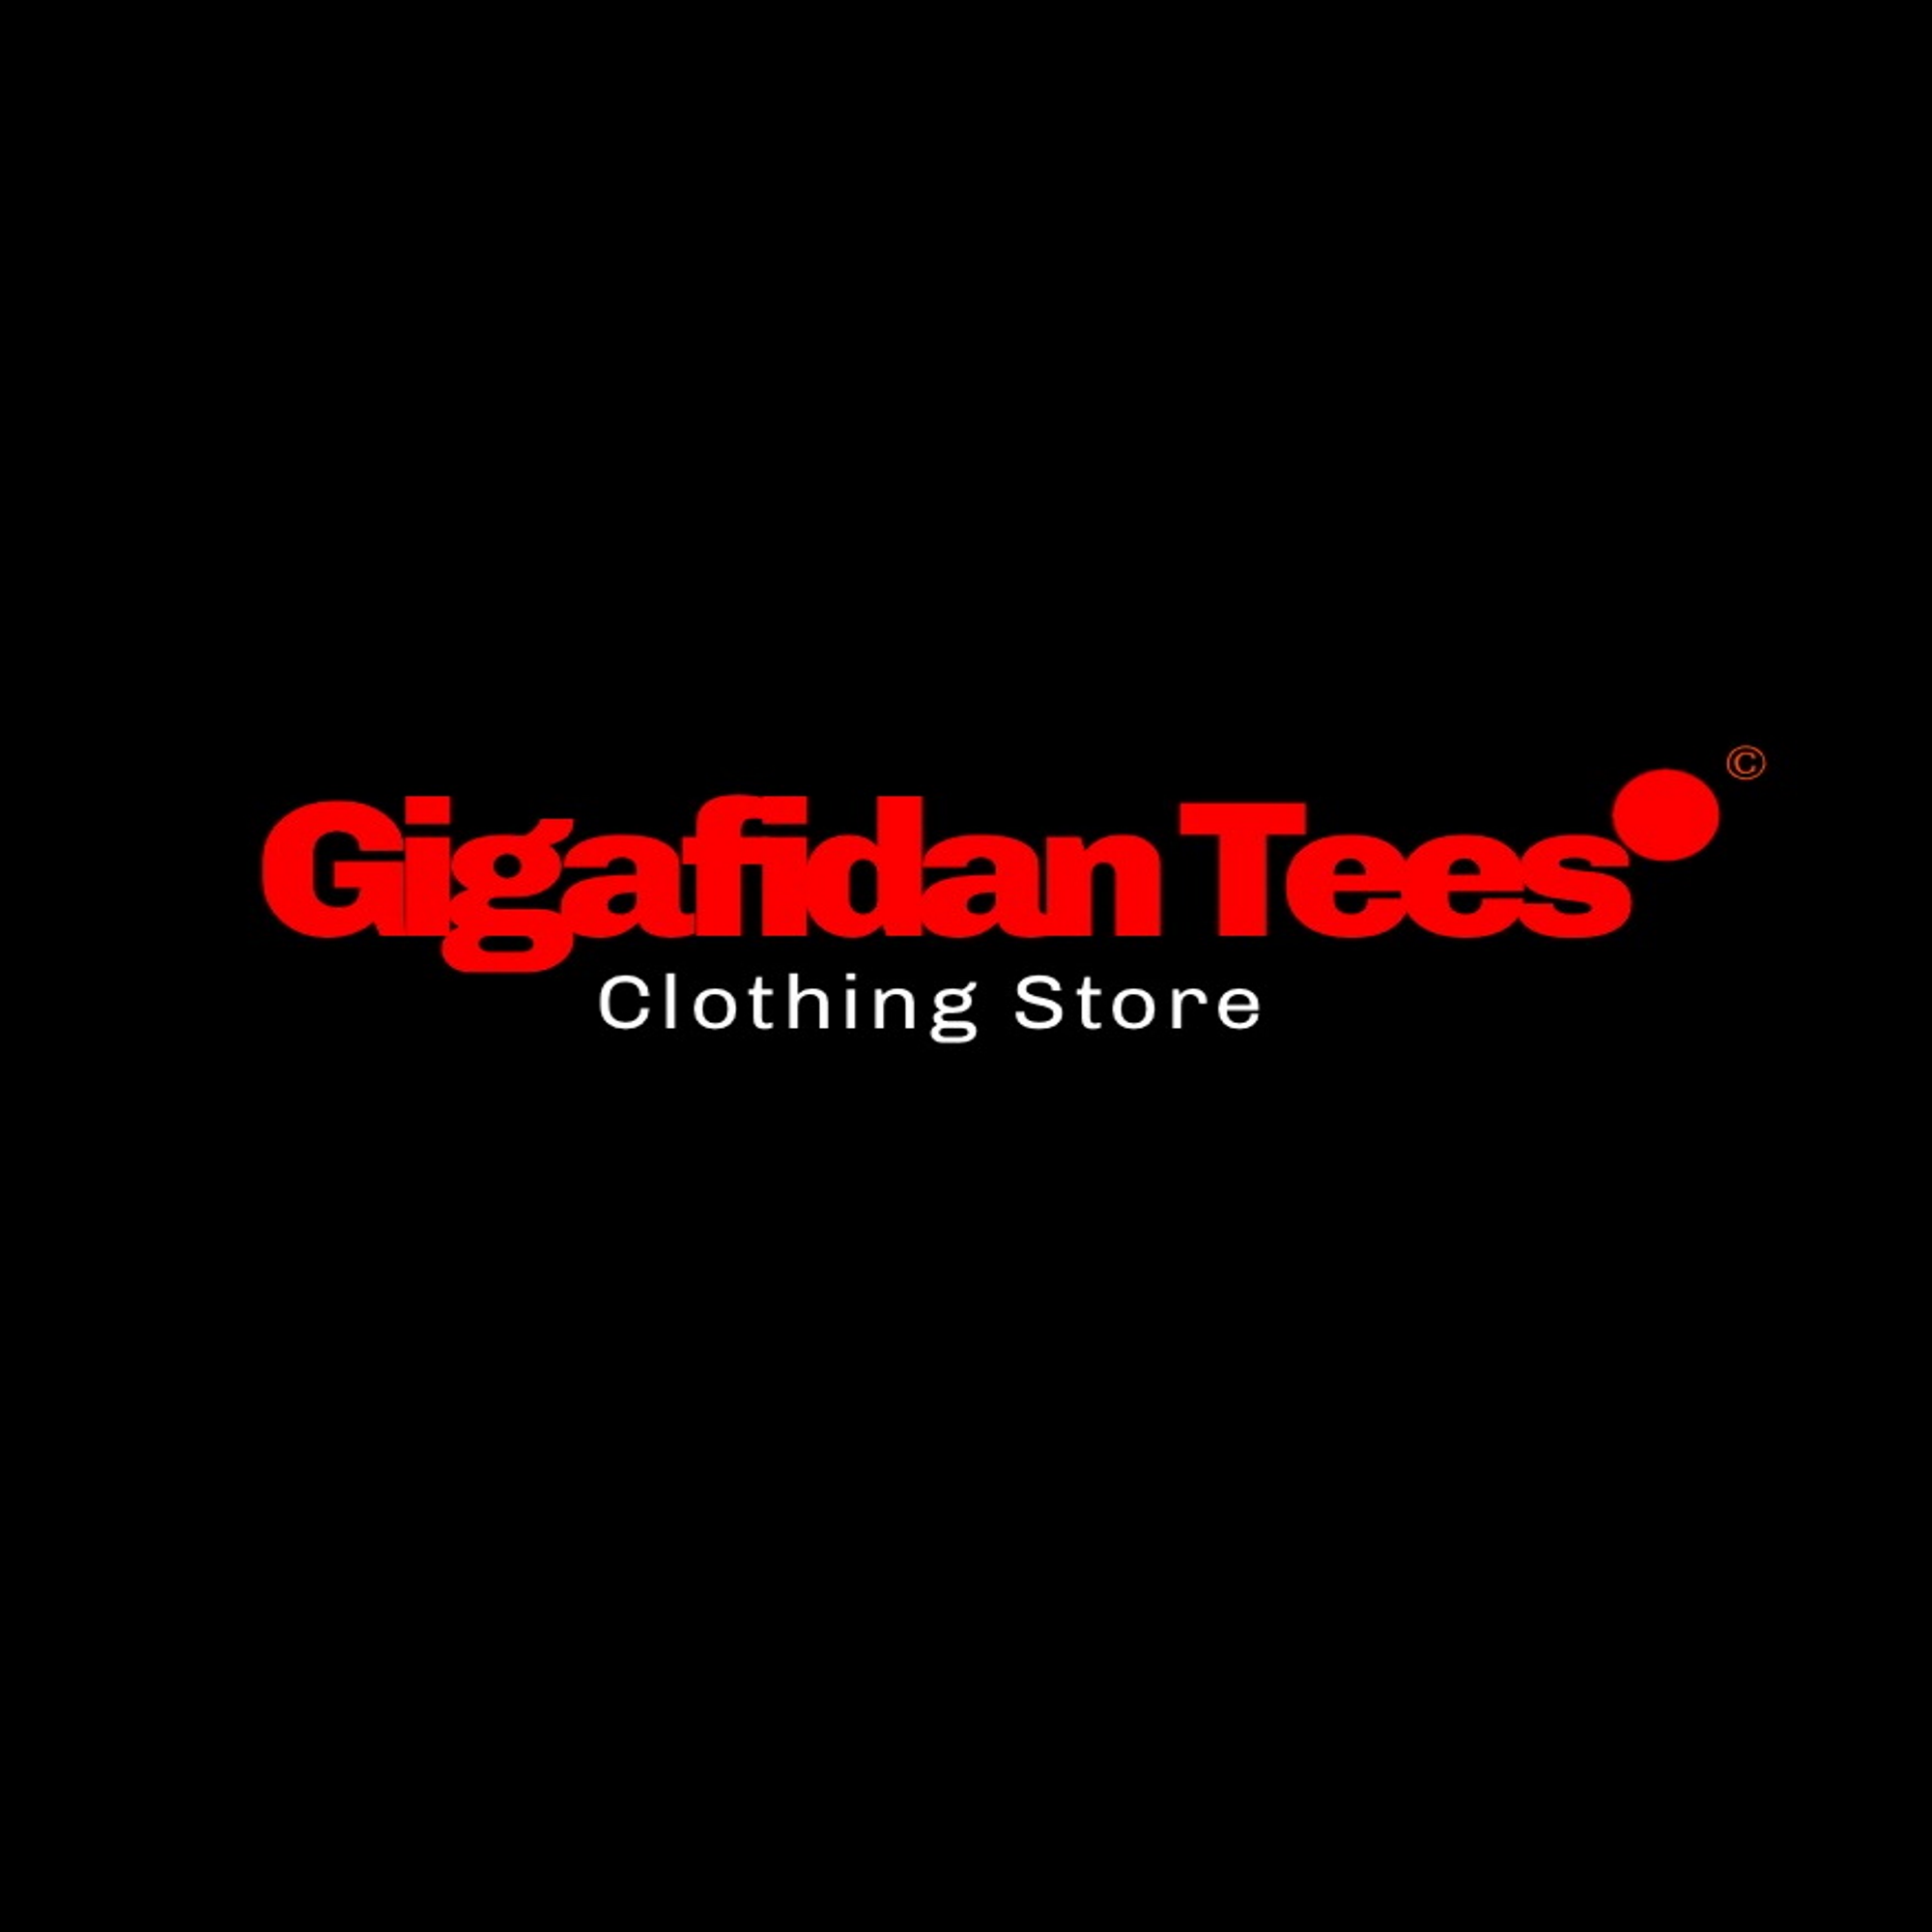 Gigafidan Tees Clothing Brand